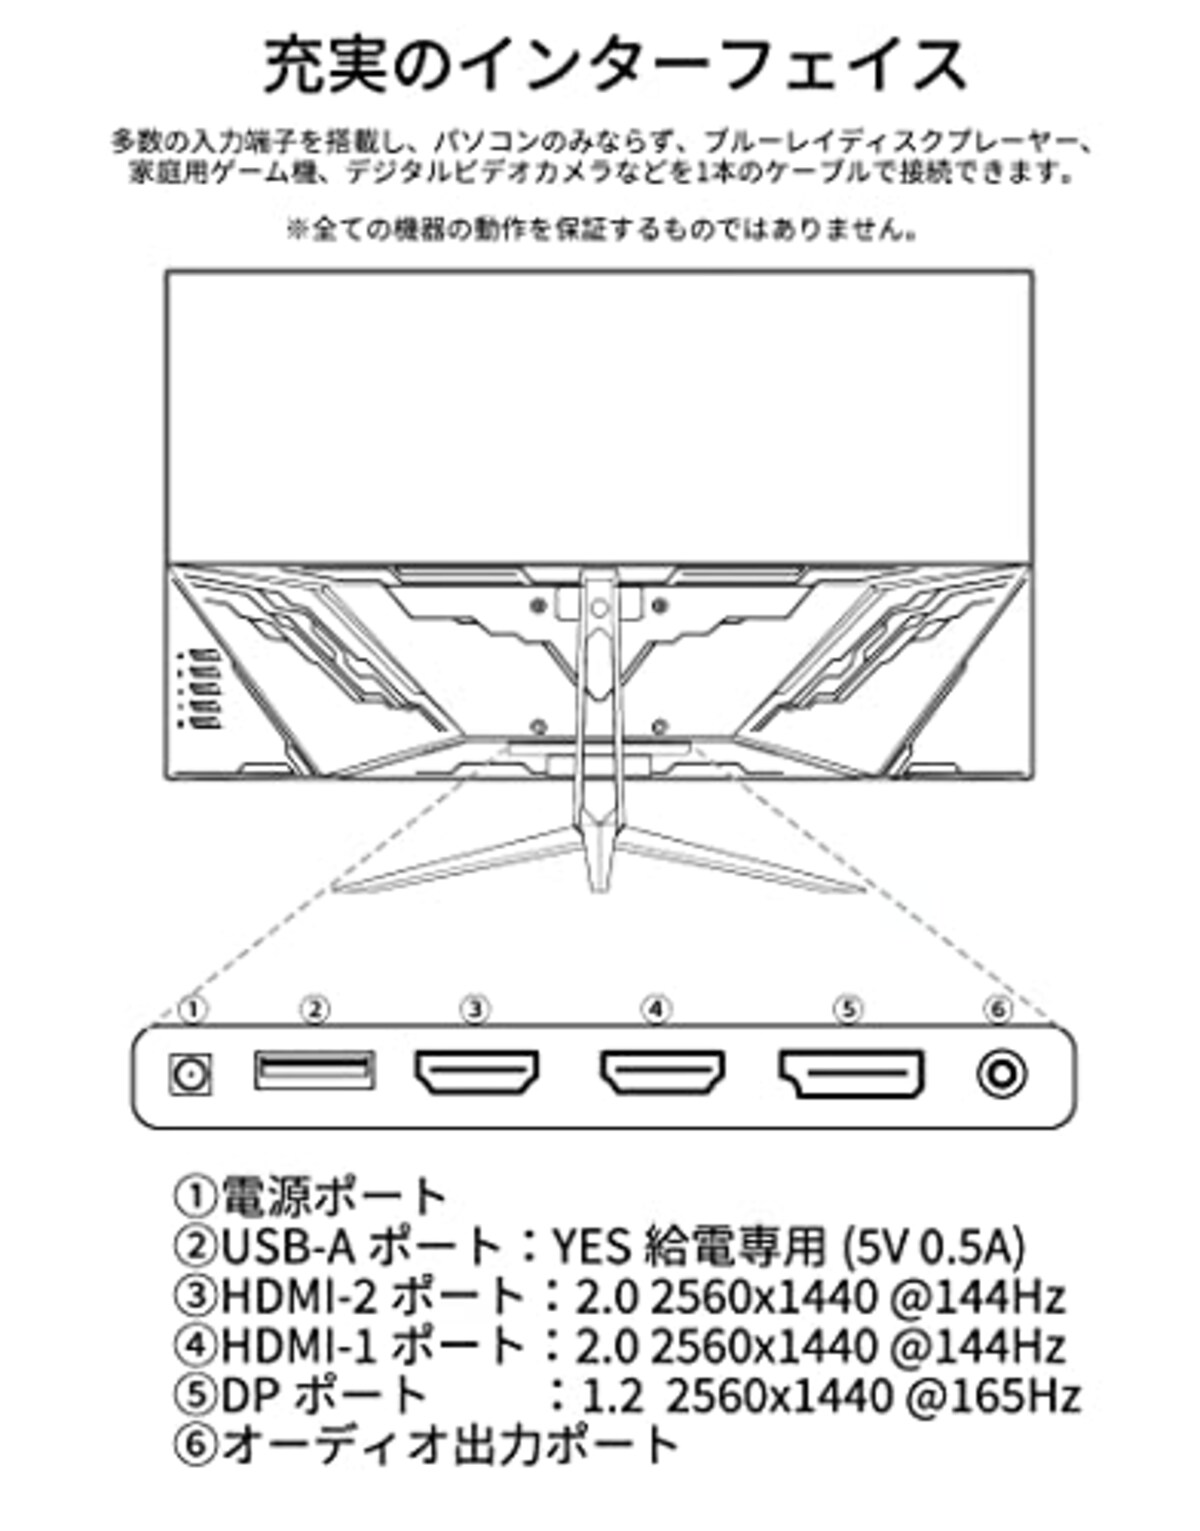  【Amazon.co.jp限定】JapanNext 31.5インチ WQHD解像度(2560x1440)165Hz対応ゲーミングモニター JN-V3150WQHDR165 HDMI DP画像4 